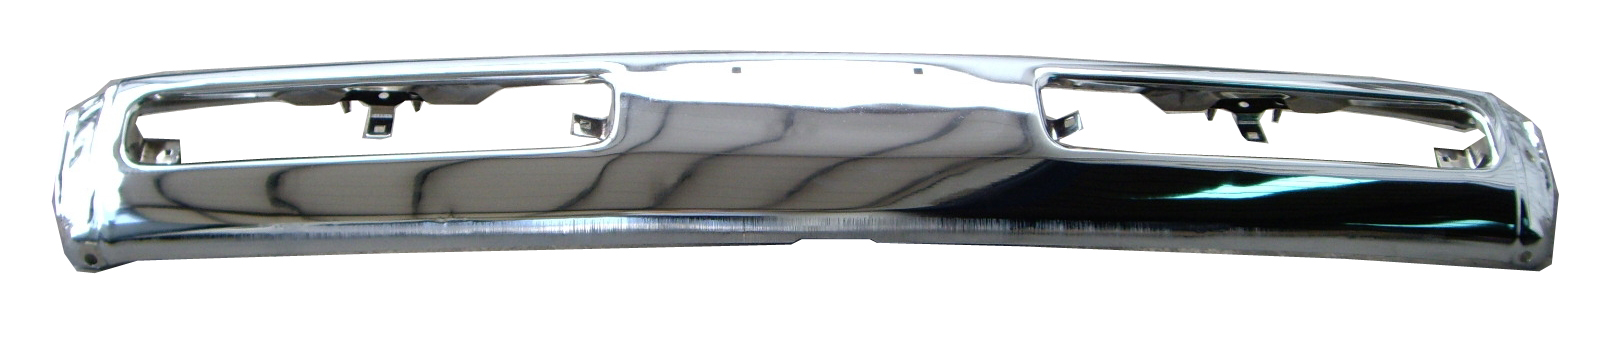 Aftermarket METAL FRONT BUMPERS for NISSAN - D21, D21,93-94,Front bumper face bar